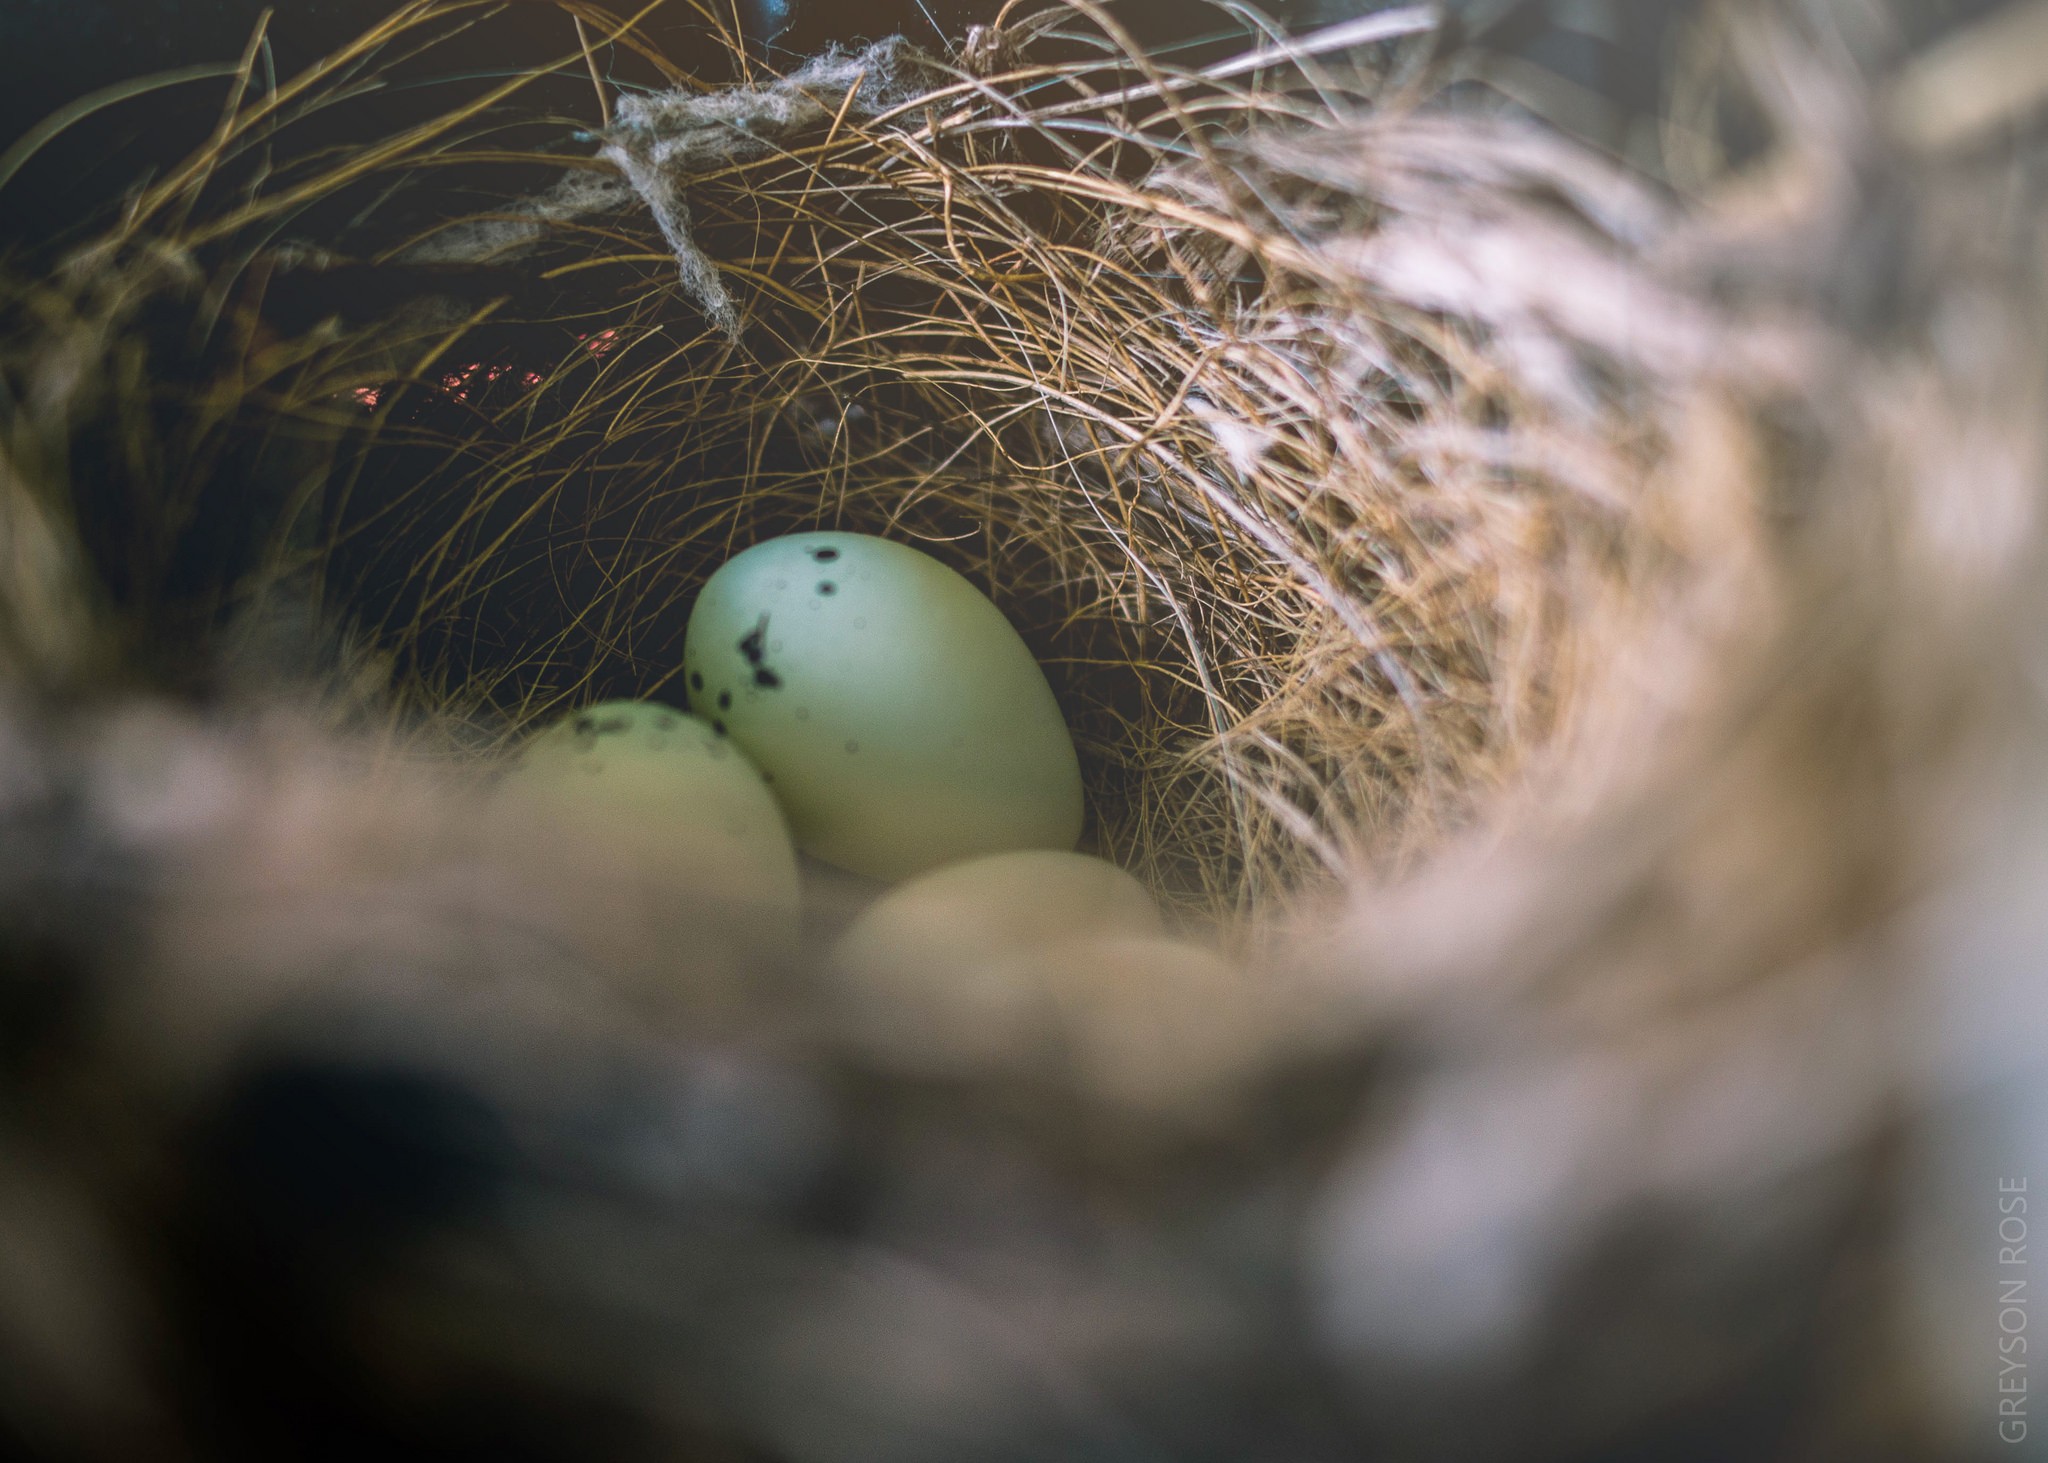 General 2048x1463 macro nests eggs